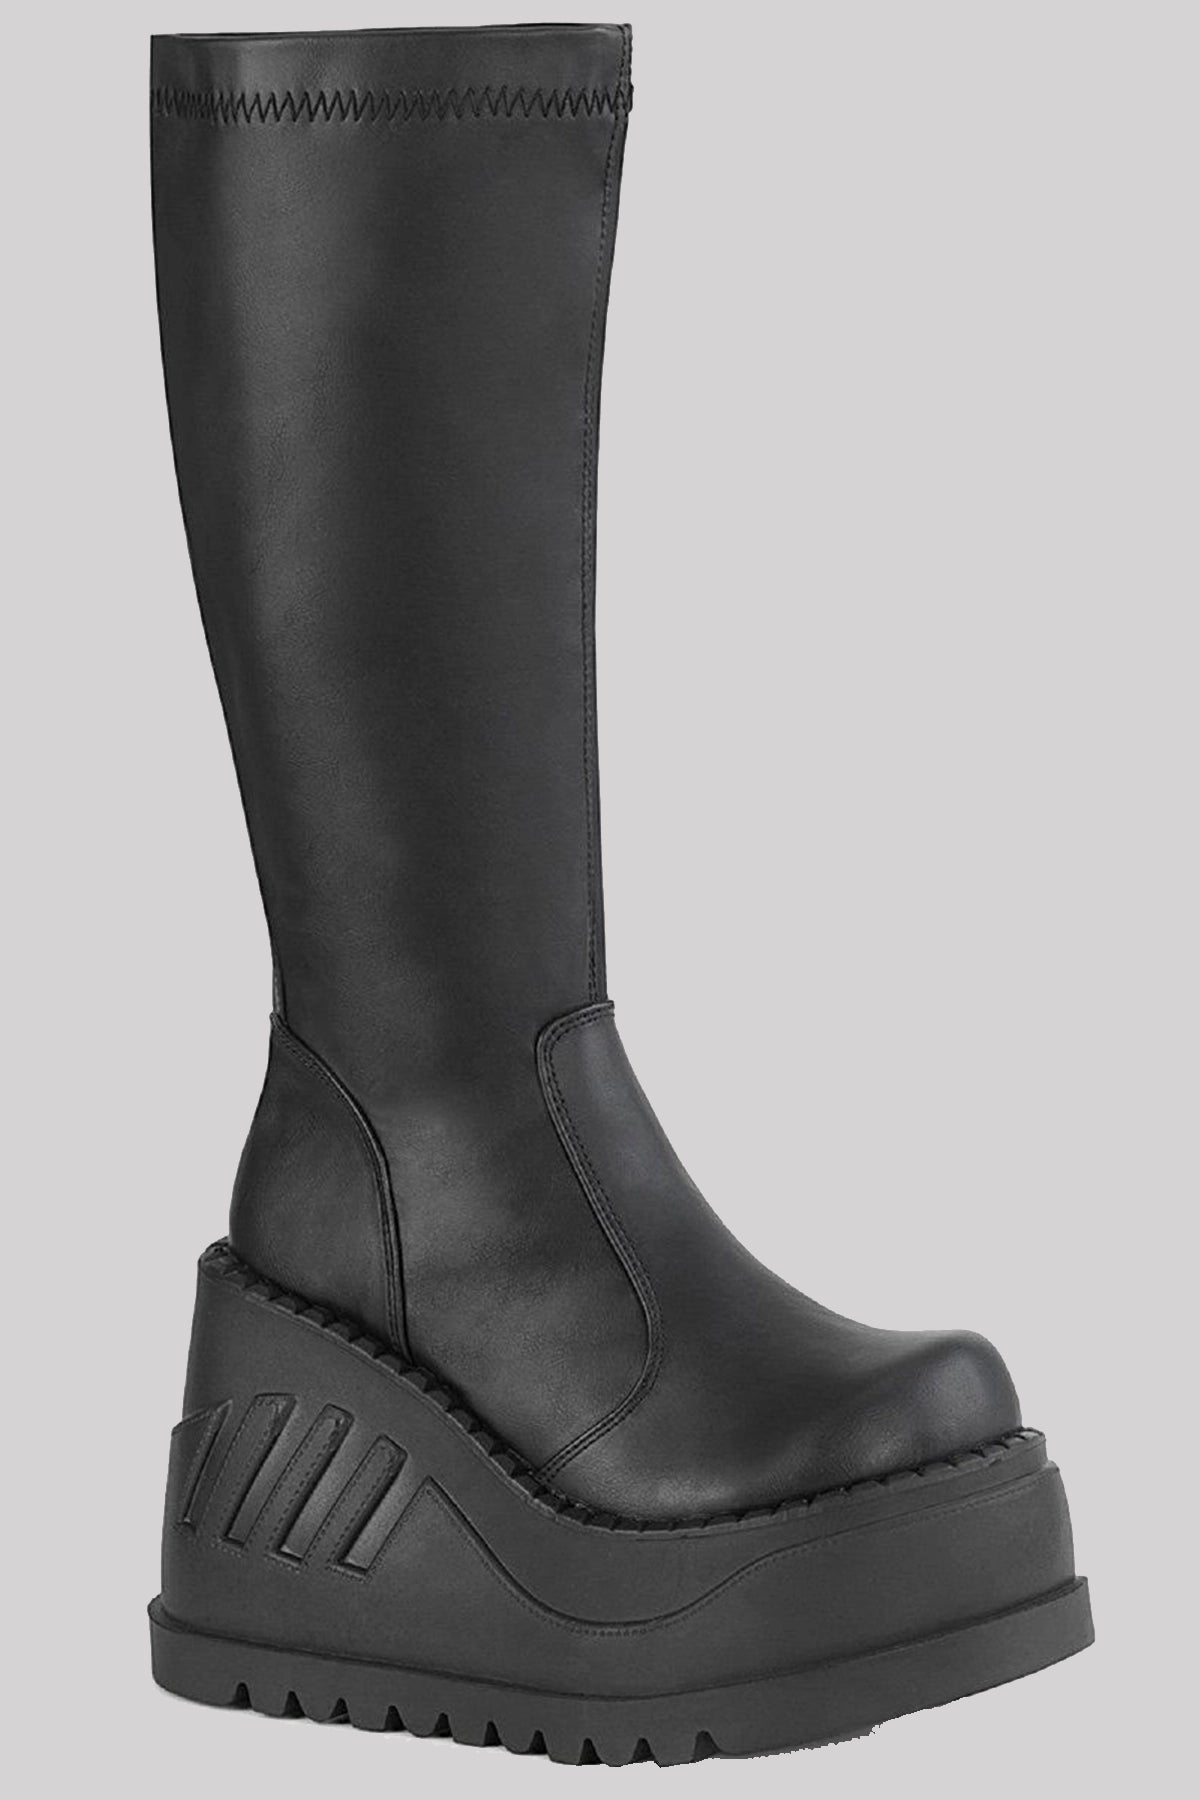 Demonia Stomp-200 Goth Punk Wedge Platform Knee High Boots